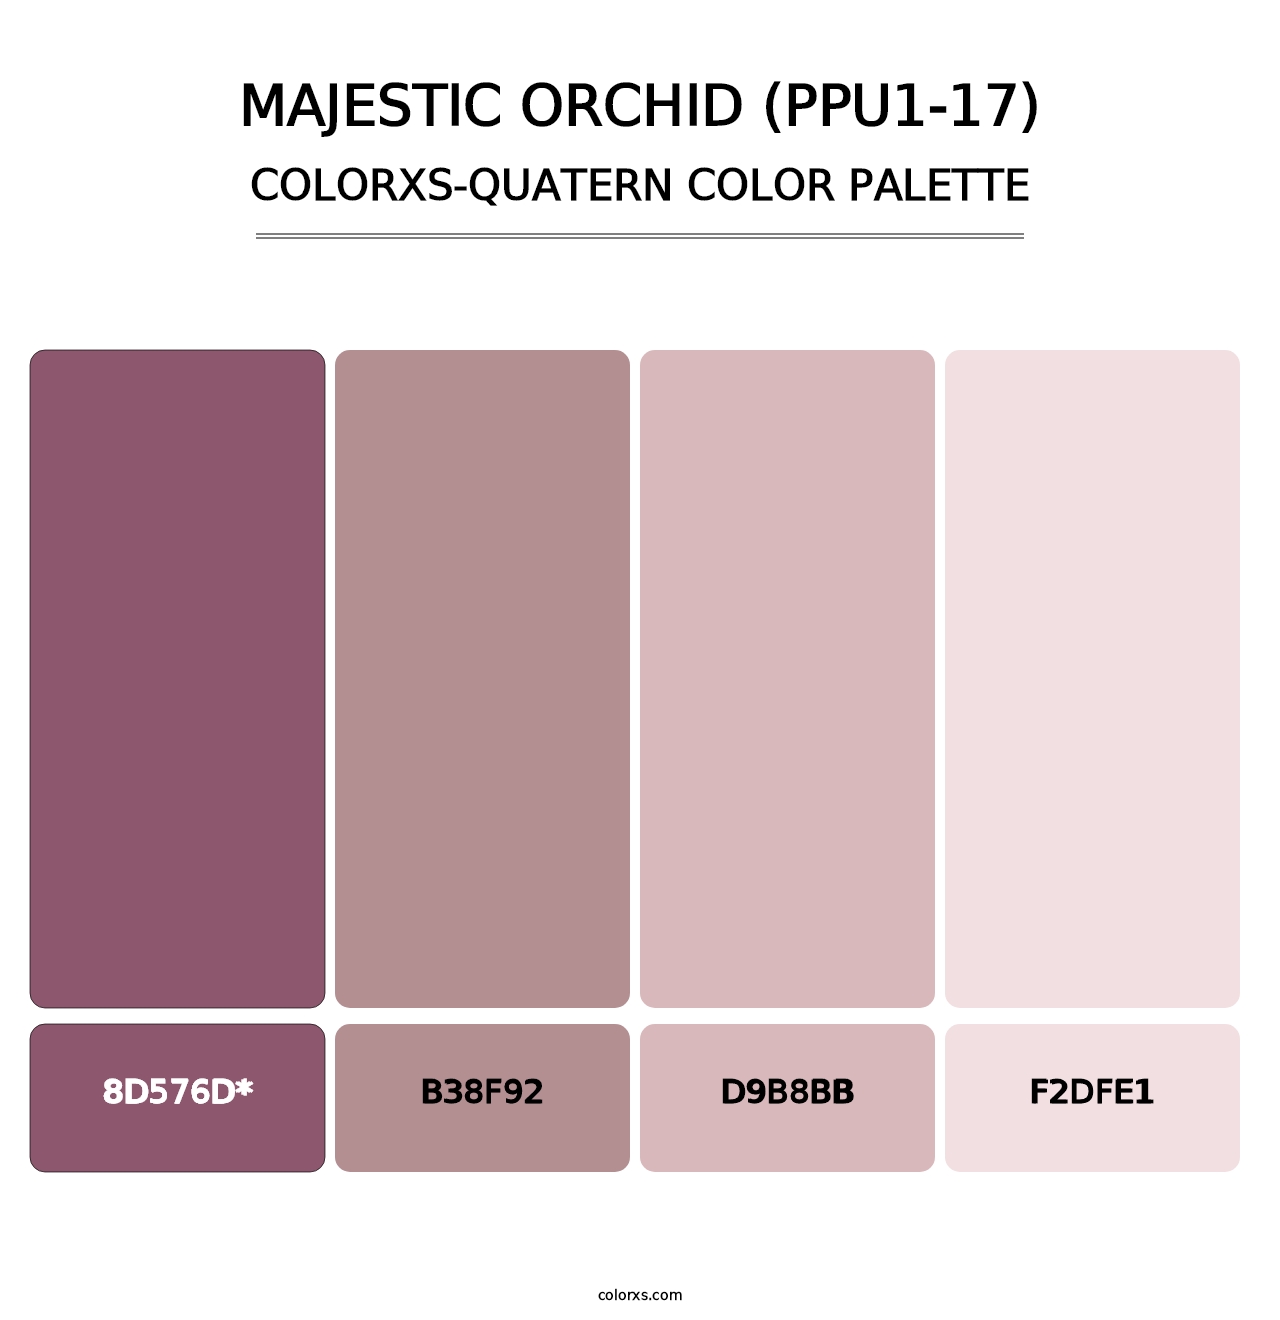 Majestic Orchid (PPU1-17) - Colorxs Quatern Palette